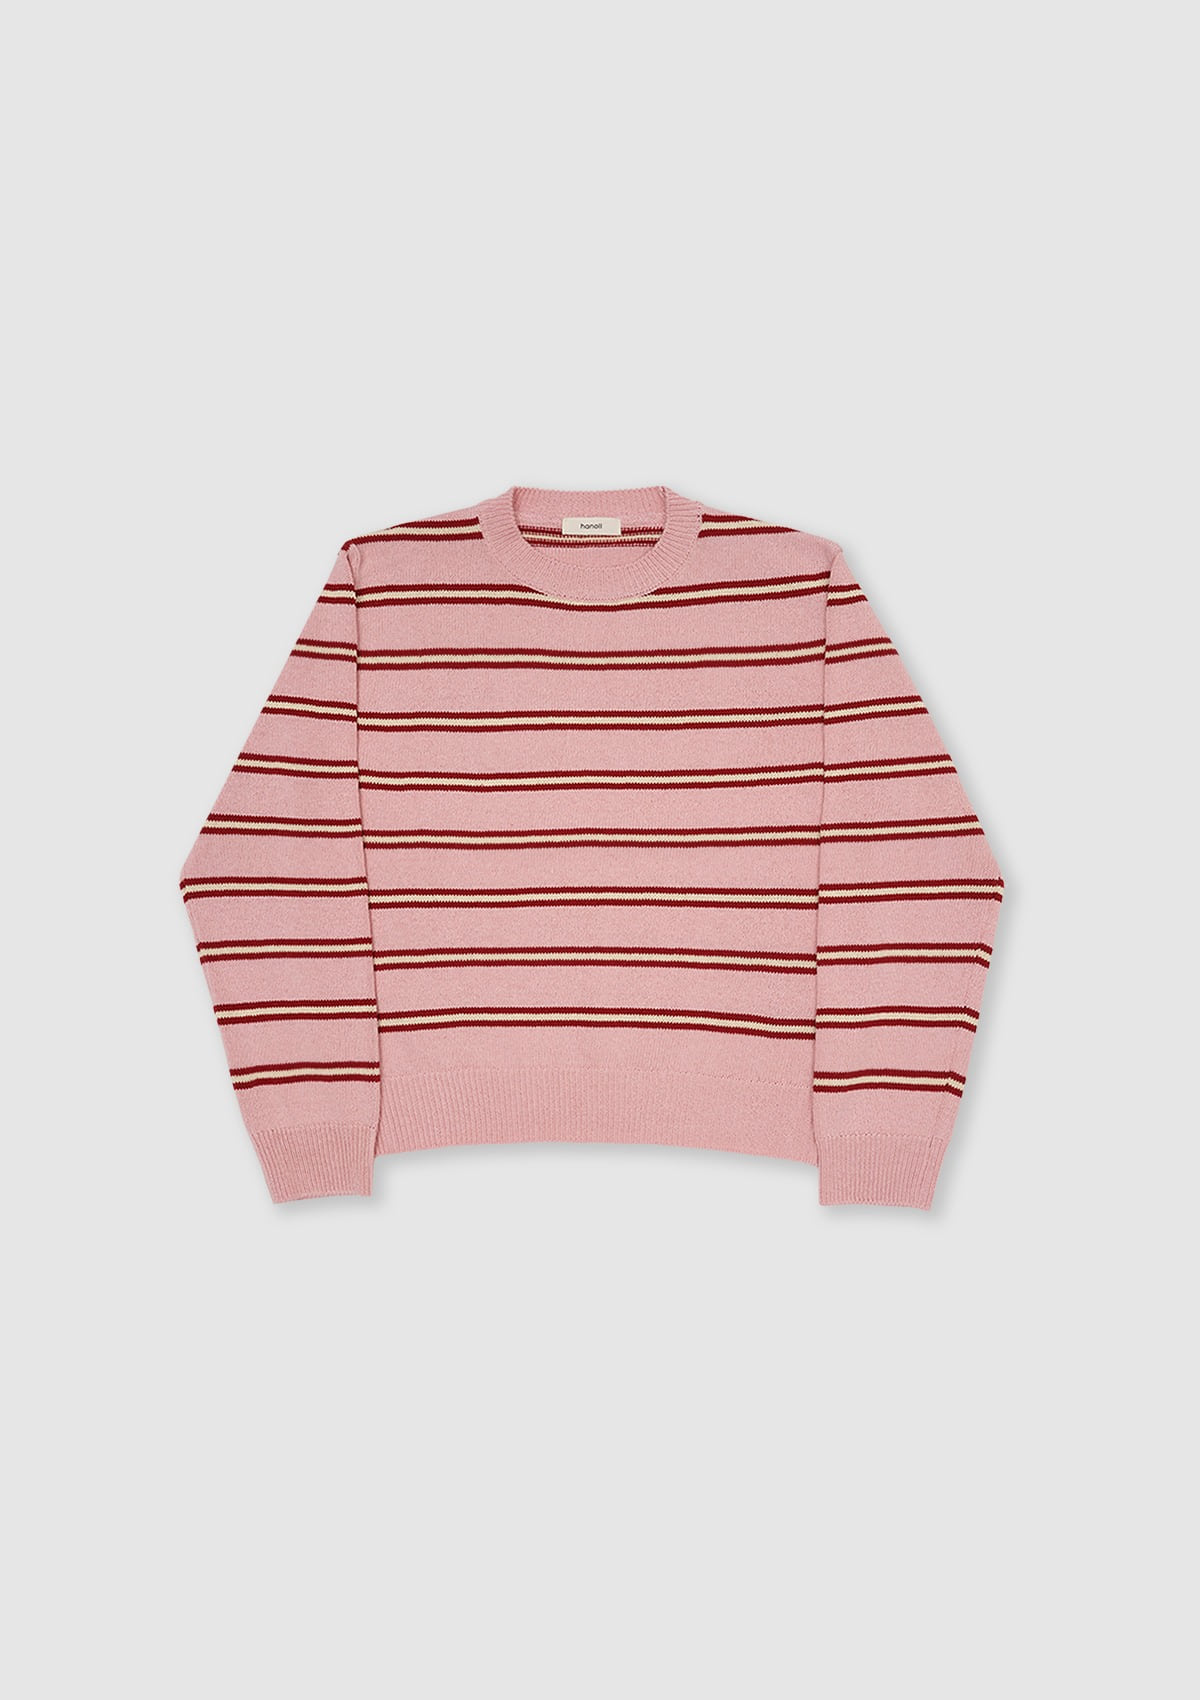 Palette Knit (Pink)